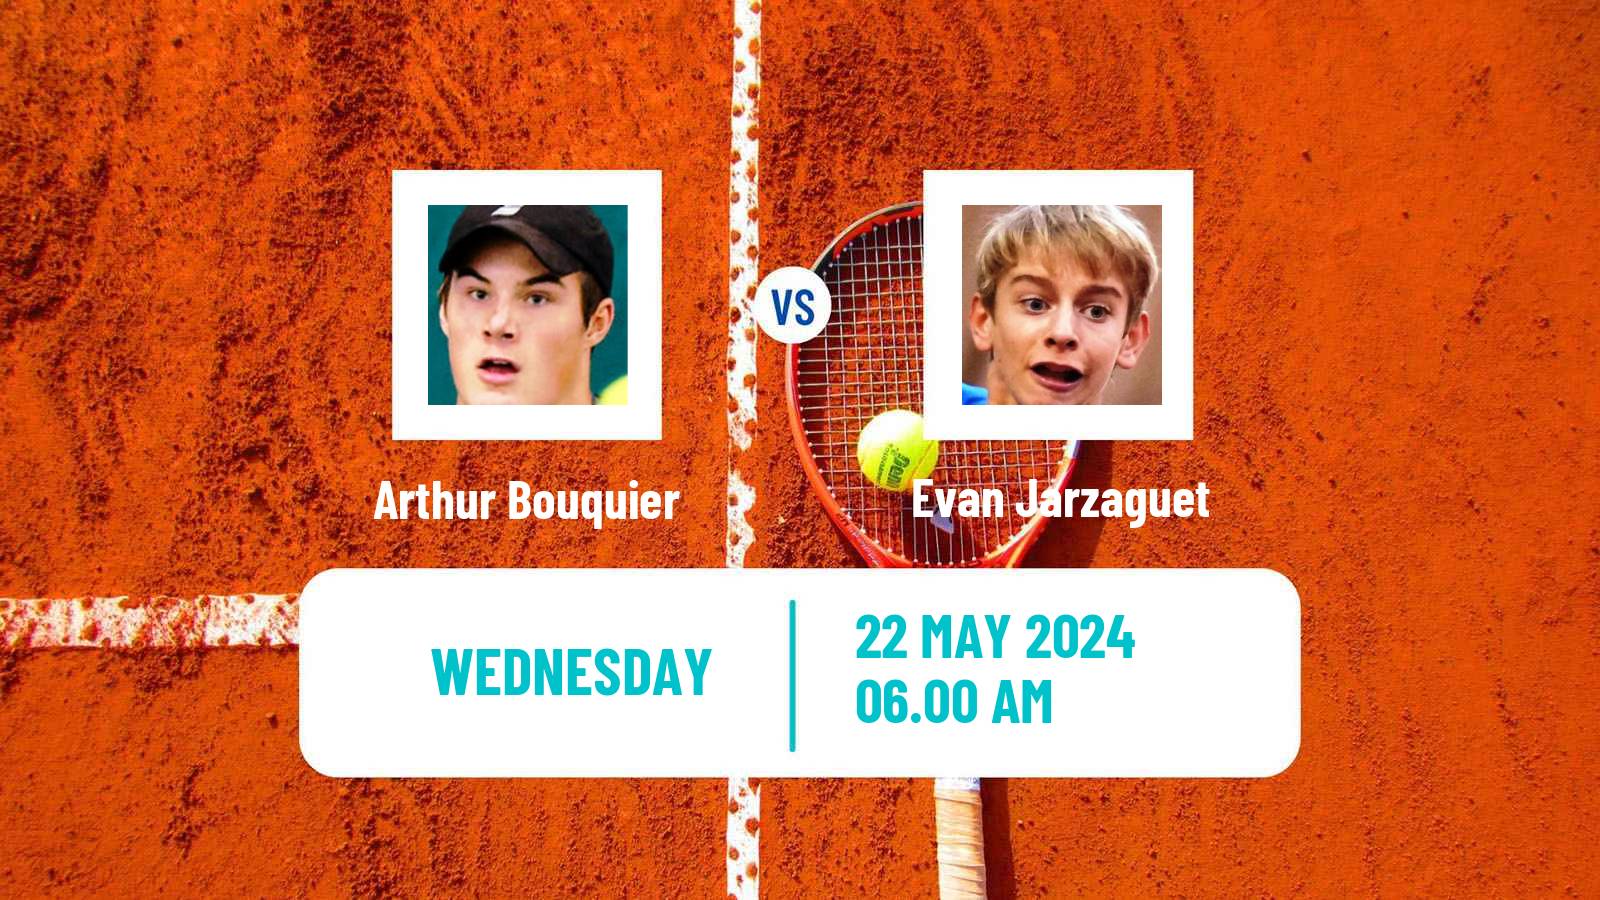 Tennis ITF M15 Monastir 21 Men Arthur Bouquier - Evan Jarzaguet